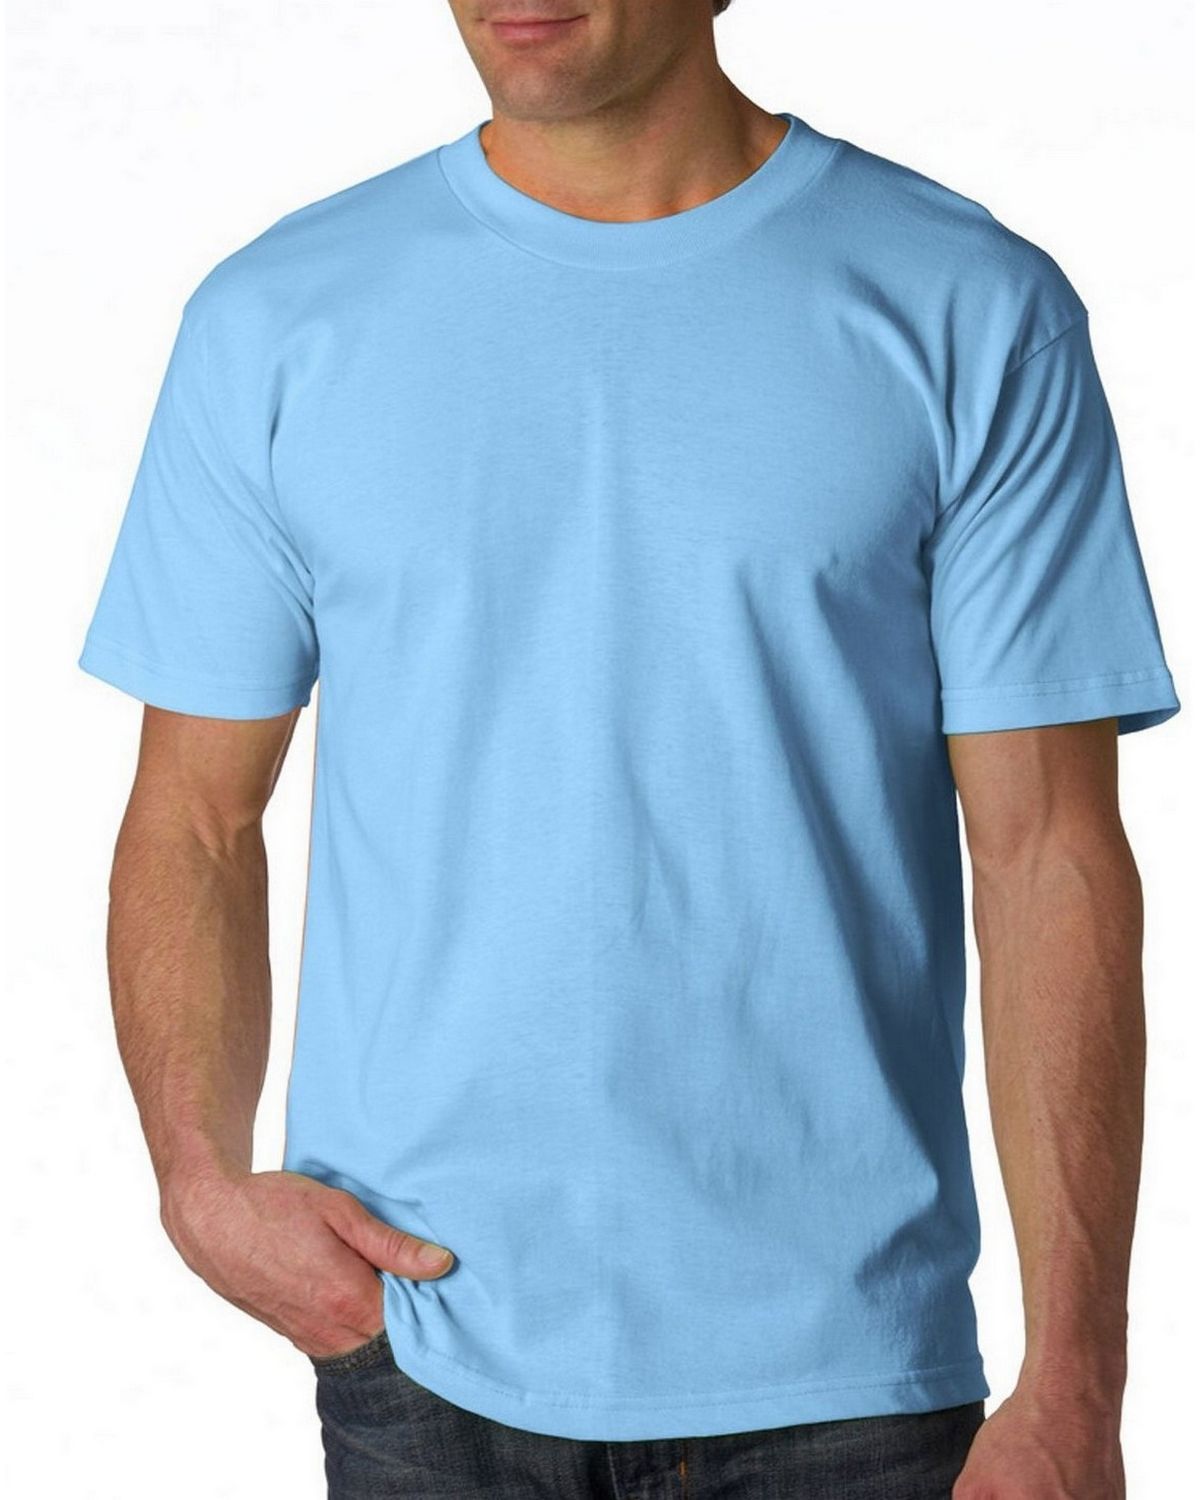 Download Buy light blue t shirt template - 53% OFF!